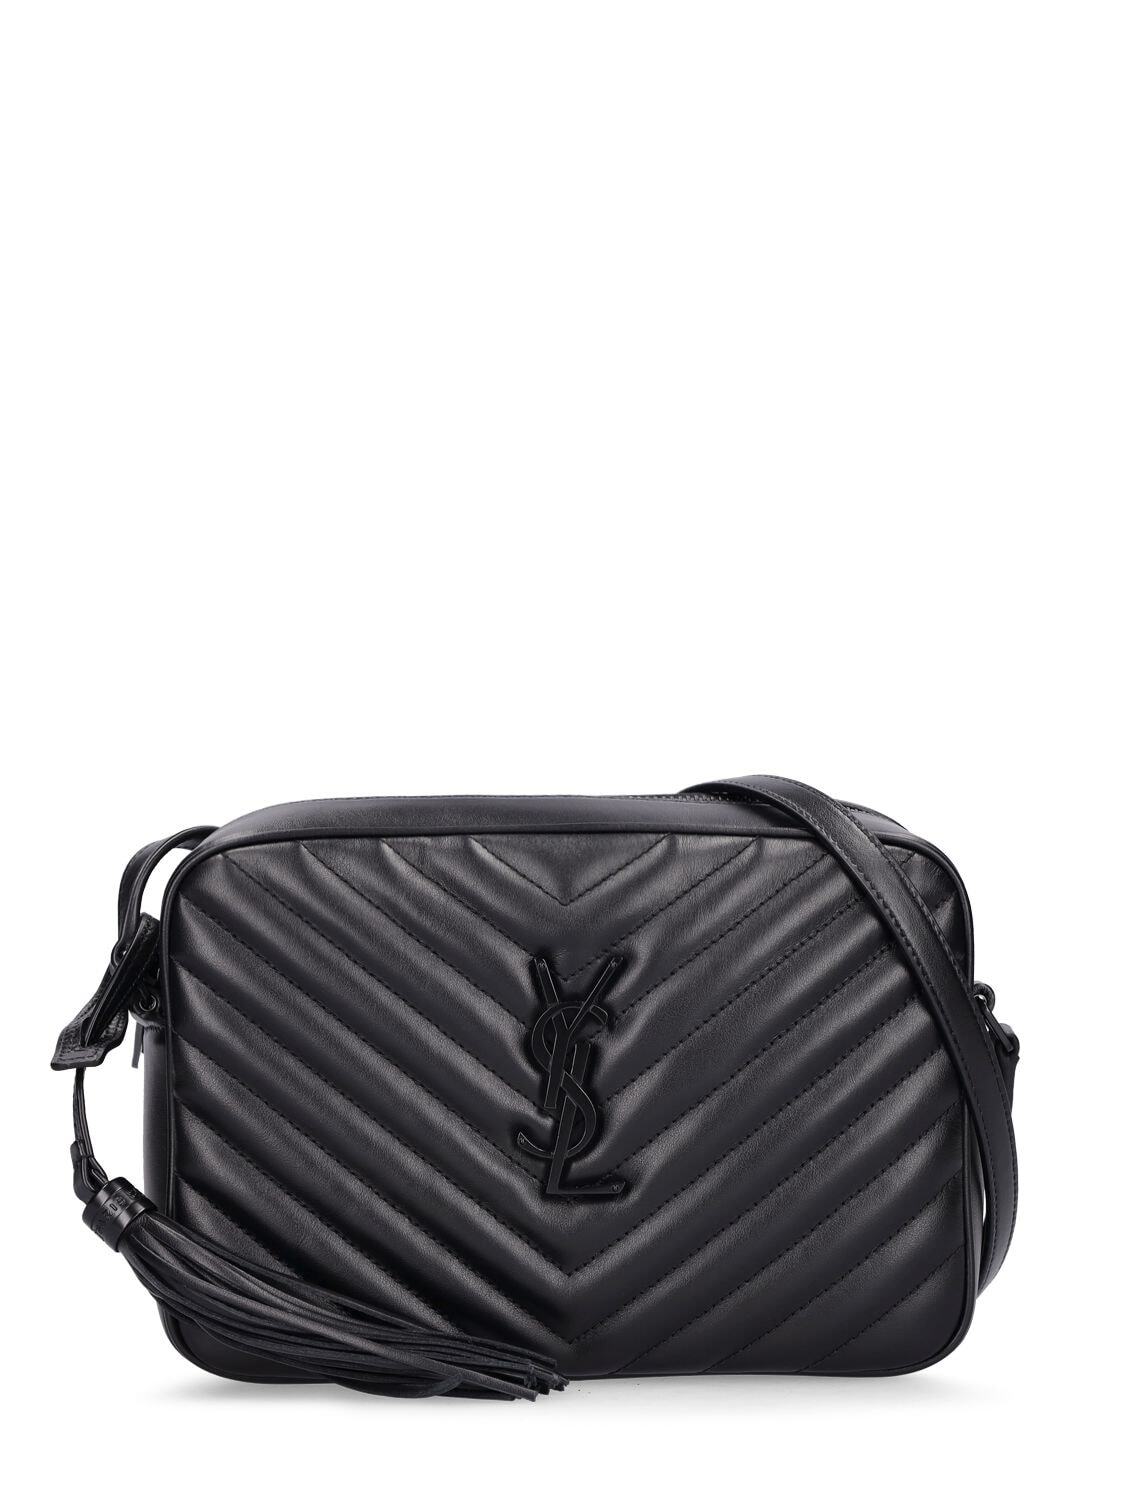 SAINT LAURENT Lou Monogram Leather Camera Bag in black